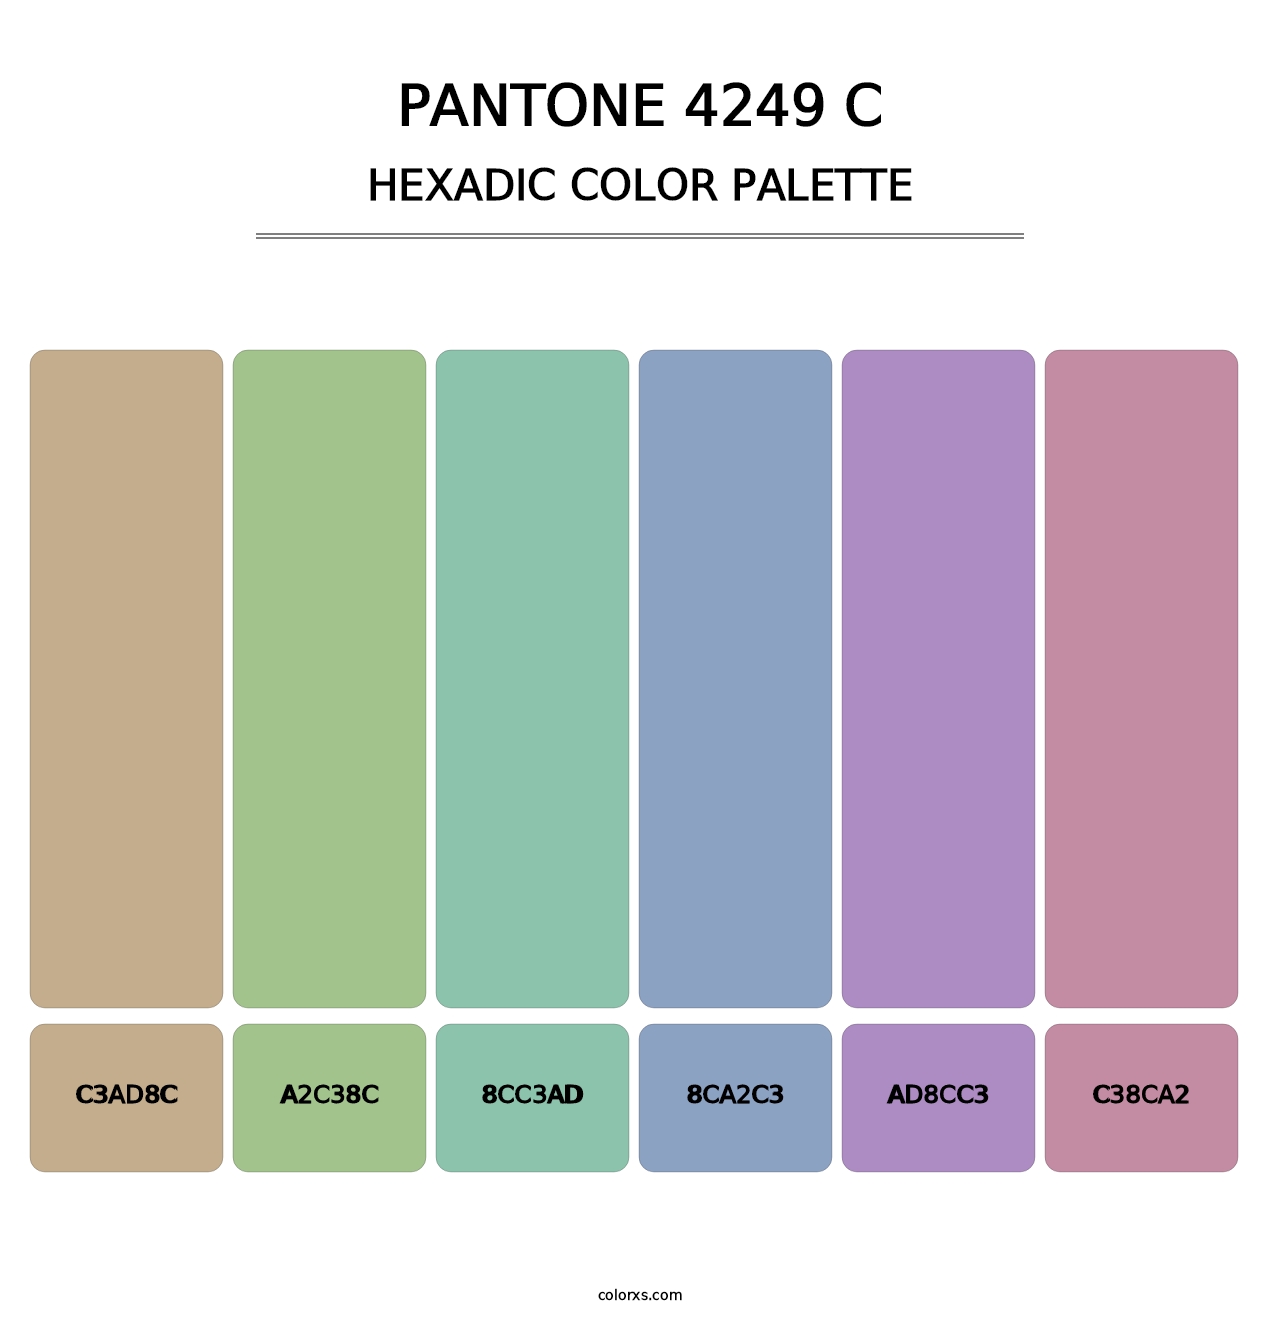 PANTONE 4249 C - Hexadic Color Palette